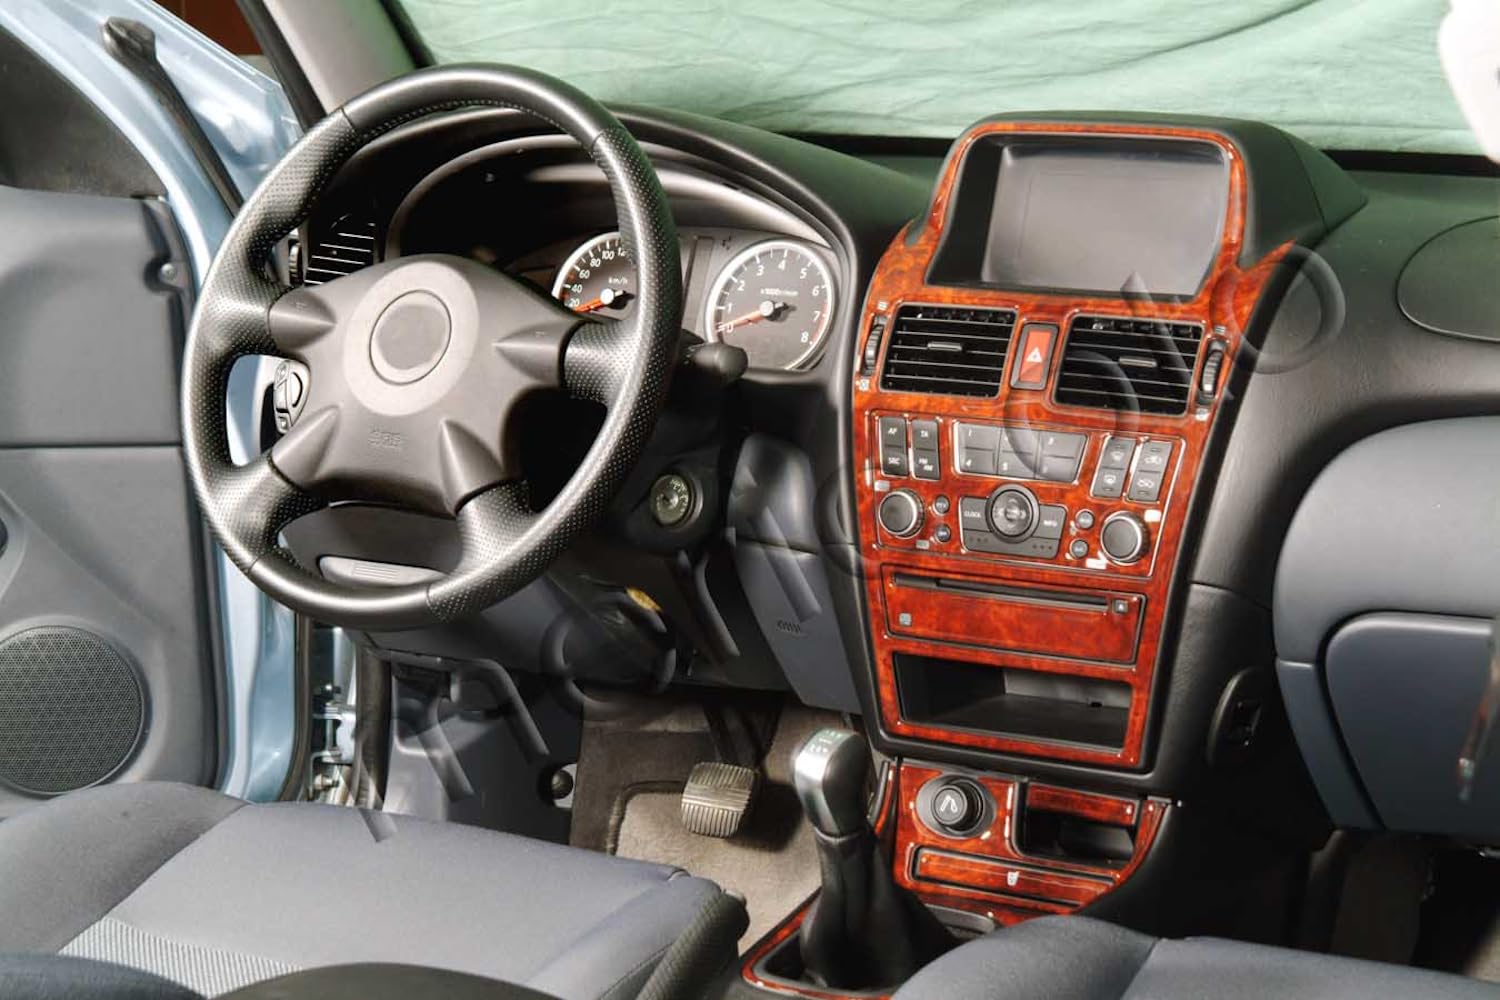 AUTOKLEIDUNG® Cockpit Dekor kompatibel mit Nissan Almera Baujahr 03/2003-12/2008 15 Teile | 3D Walnuss Optik von Autokleidung